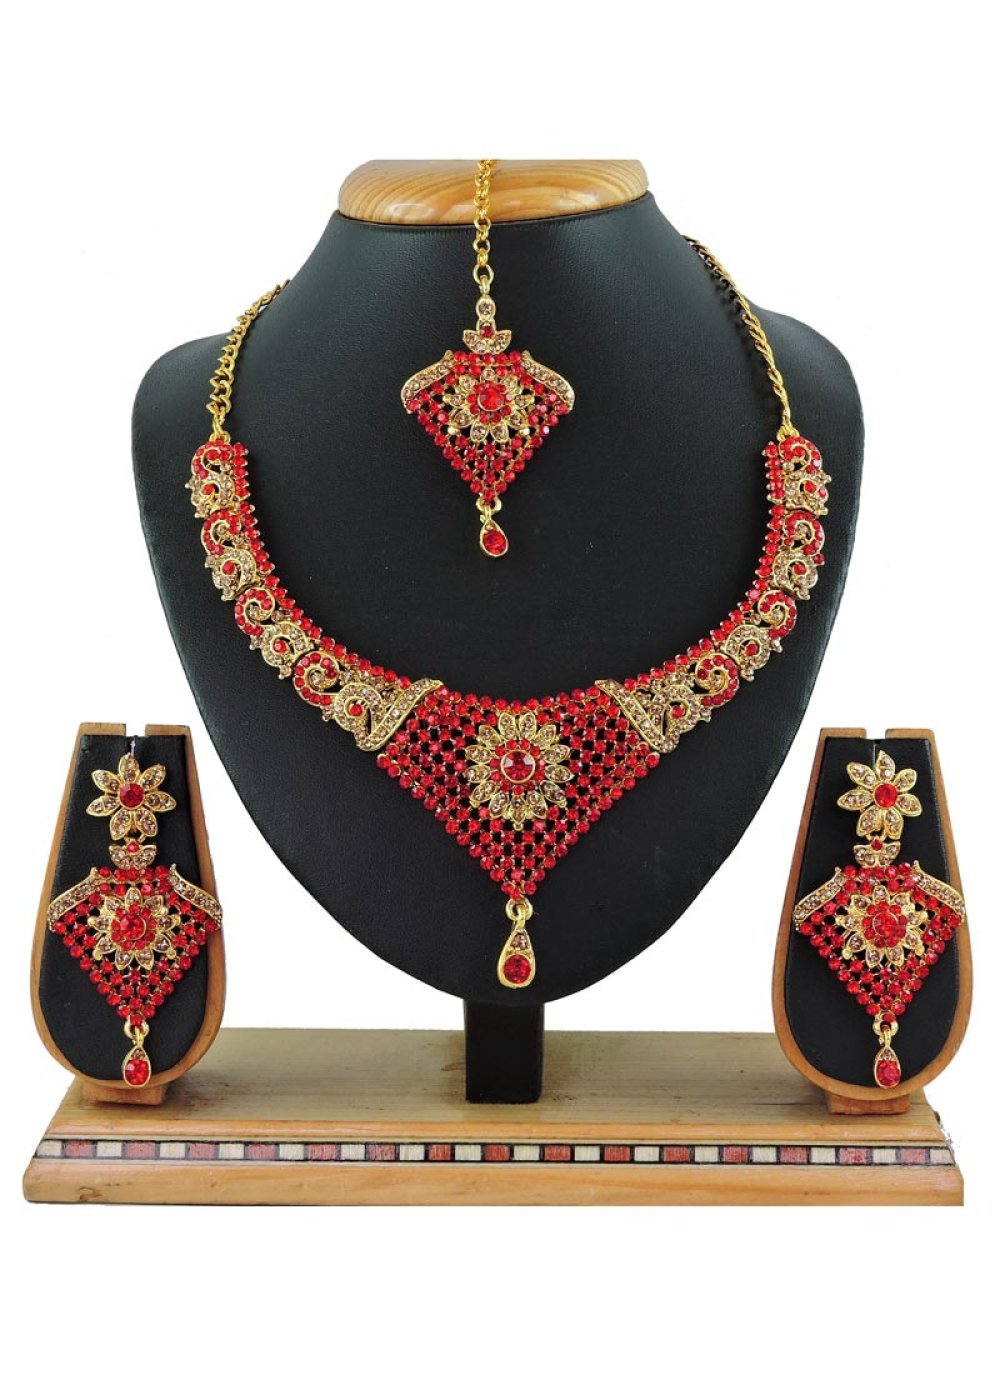 Versatile Stone Work Gold and Red Gold Rodium Polish Necklace Set